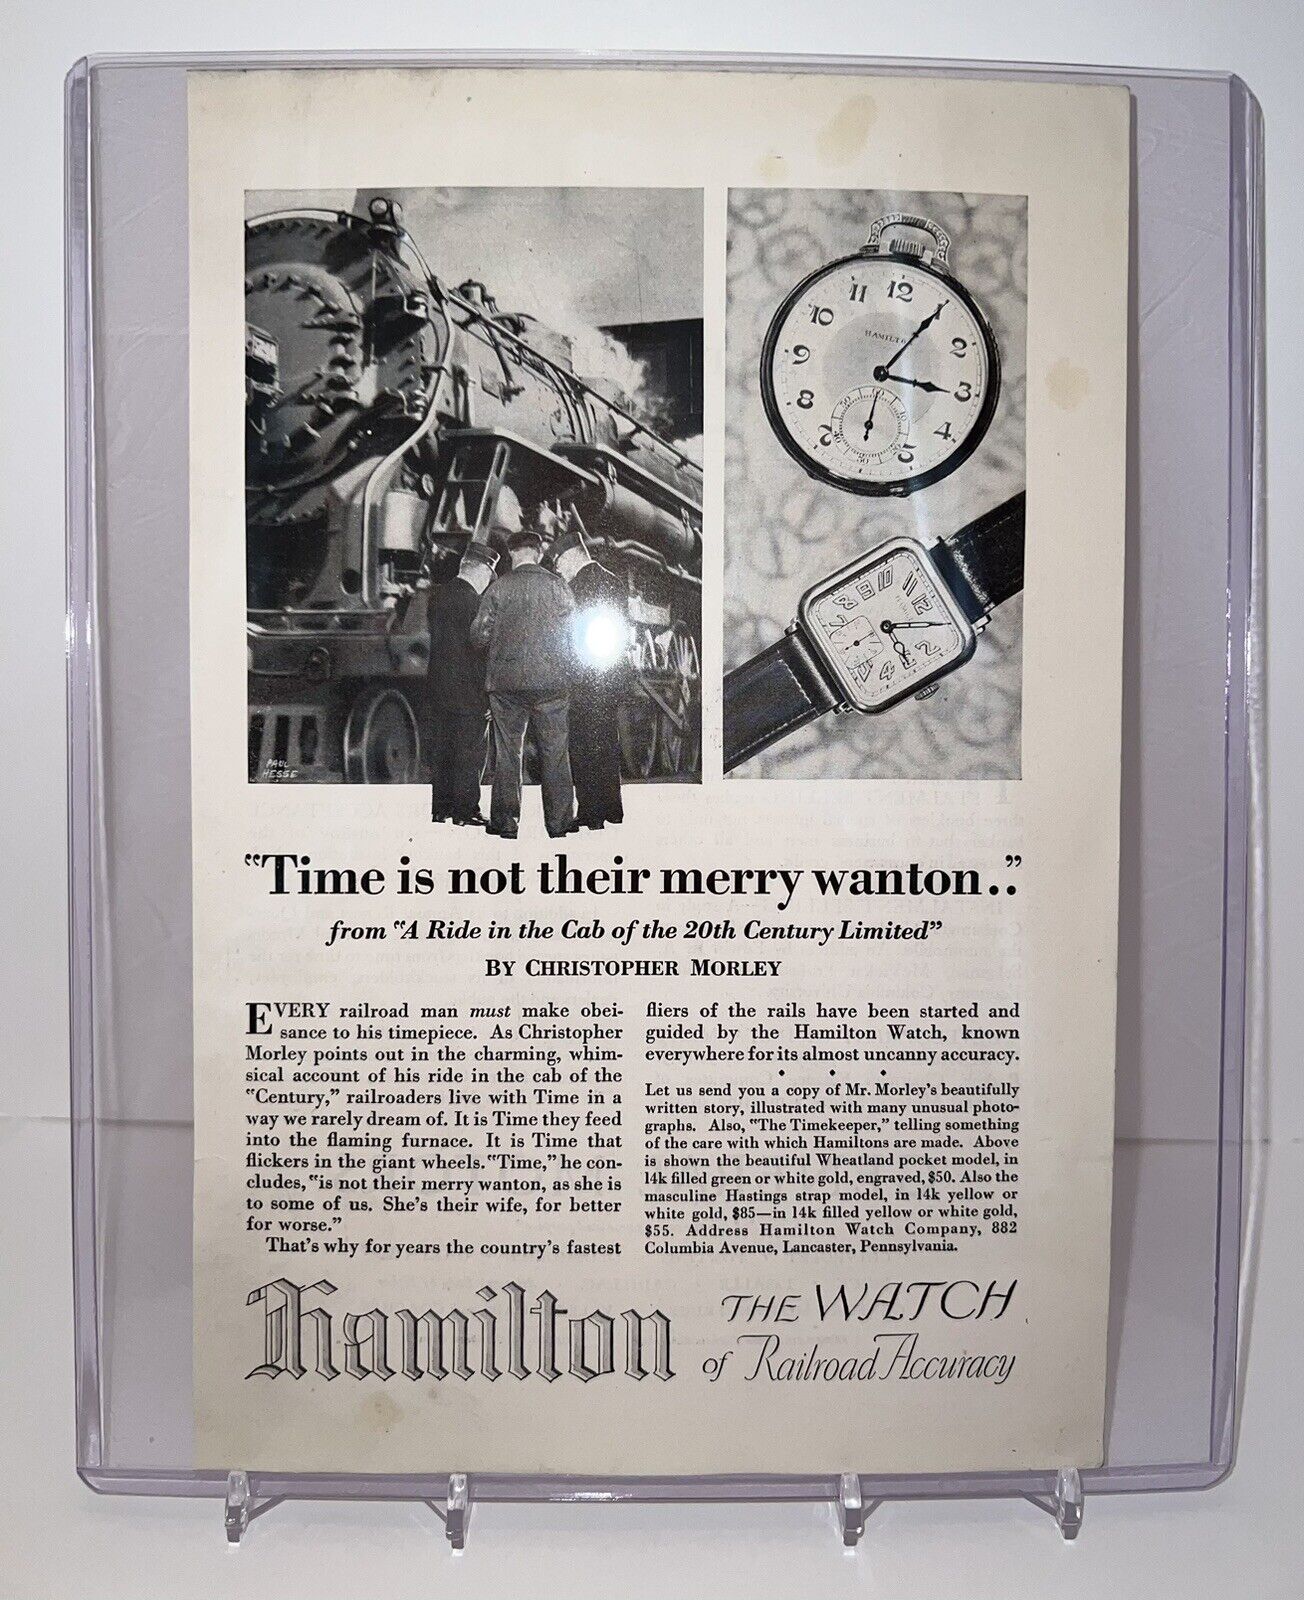 Vintage 1928 Hamilton “The Watch Of Railroad Accuracy” & General Motors PRINT AD